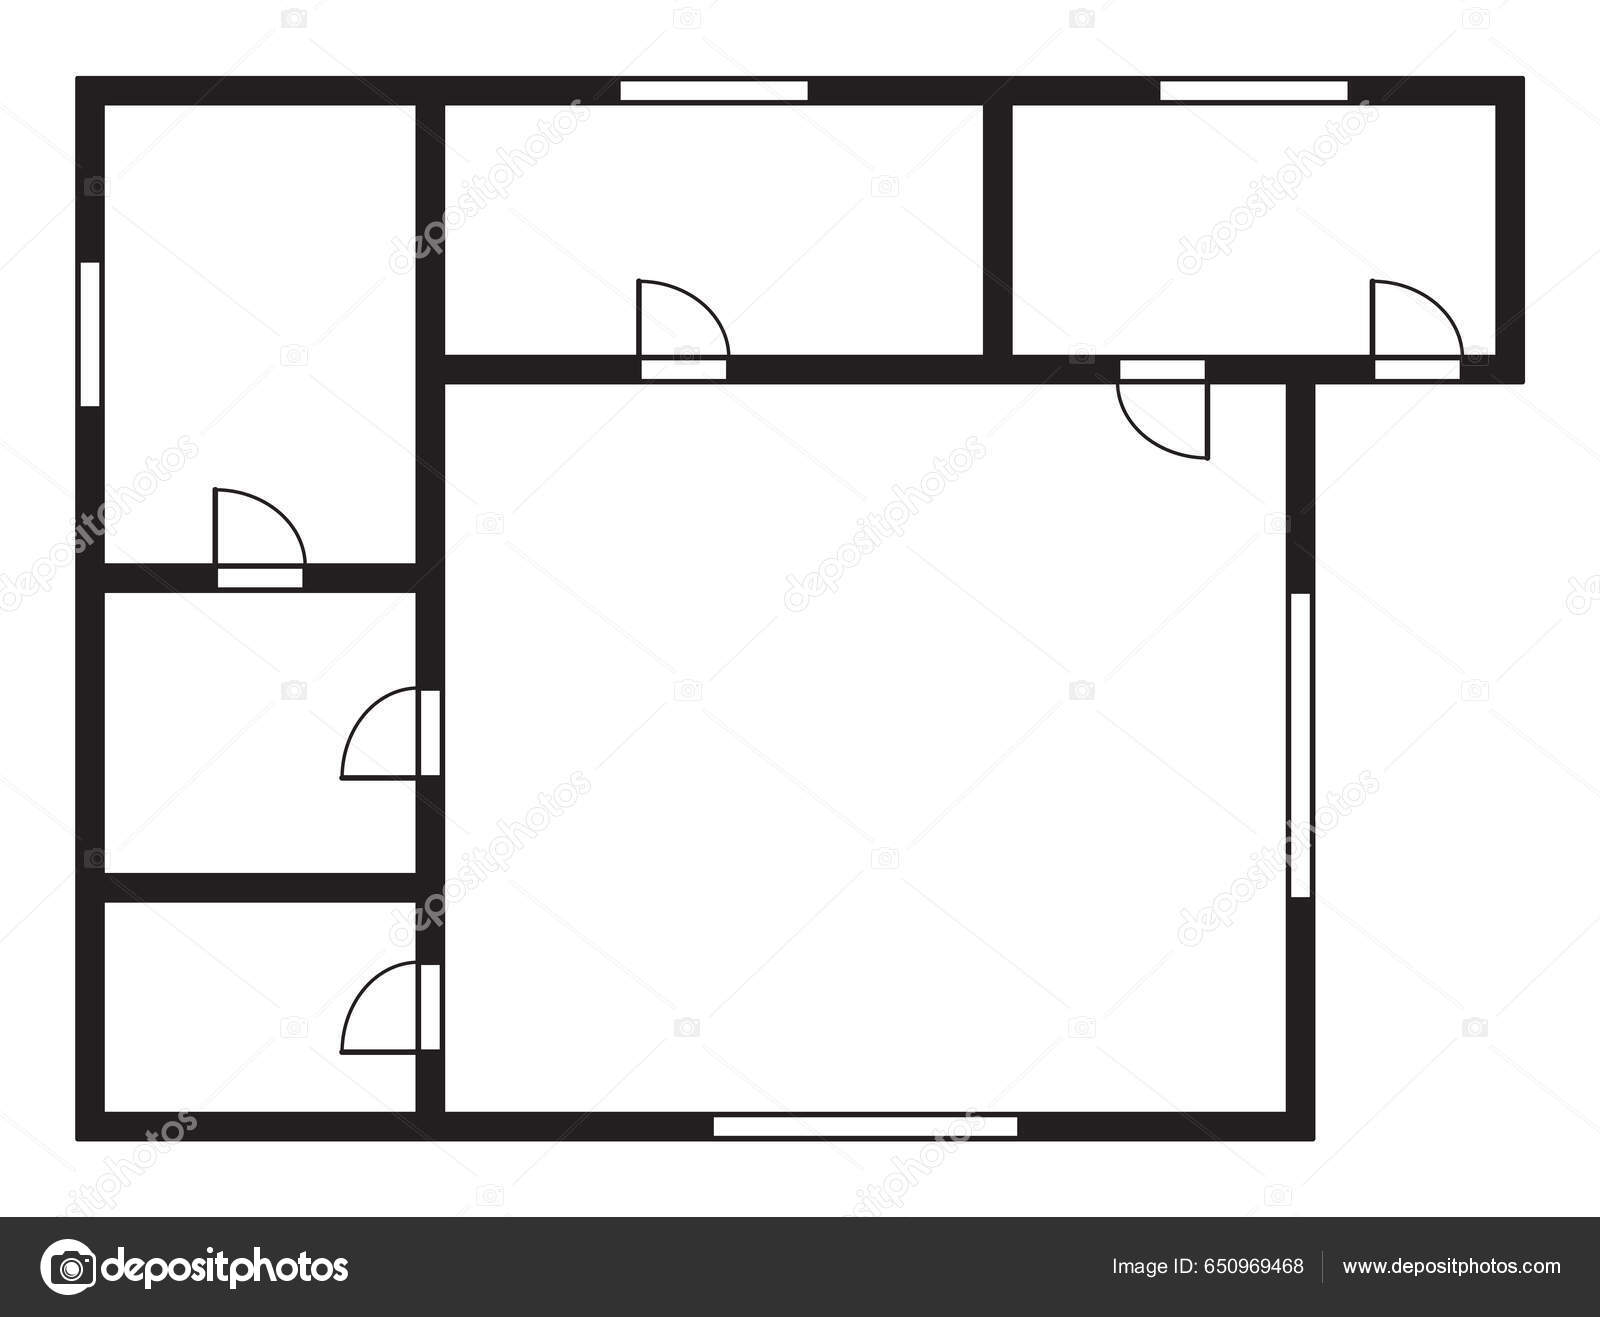 https://st5.depositphotos.com/1004996/65096/v/1600/depositphotos_650969468-stock-illustration-apartment-architectural-plan-top-view.jpg